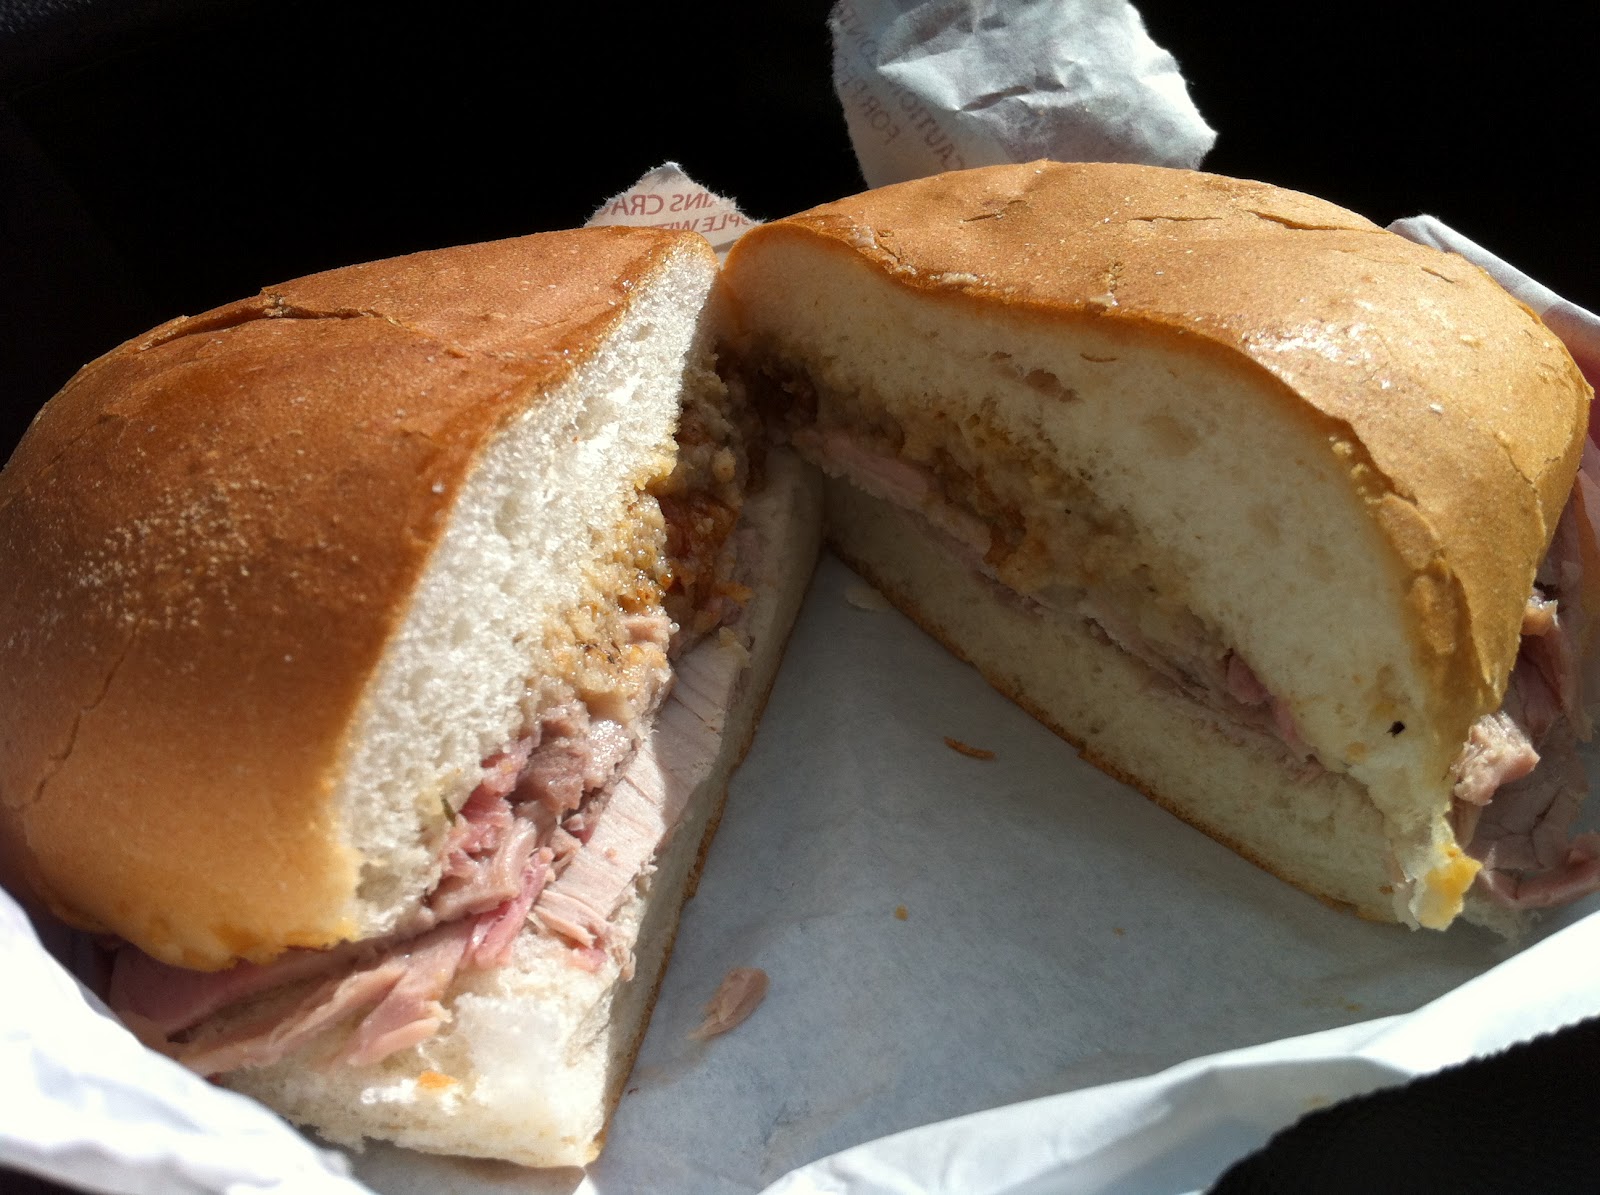 A pork sandwich from Beres in Sheffield